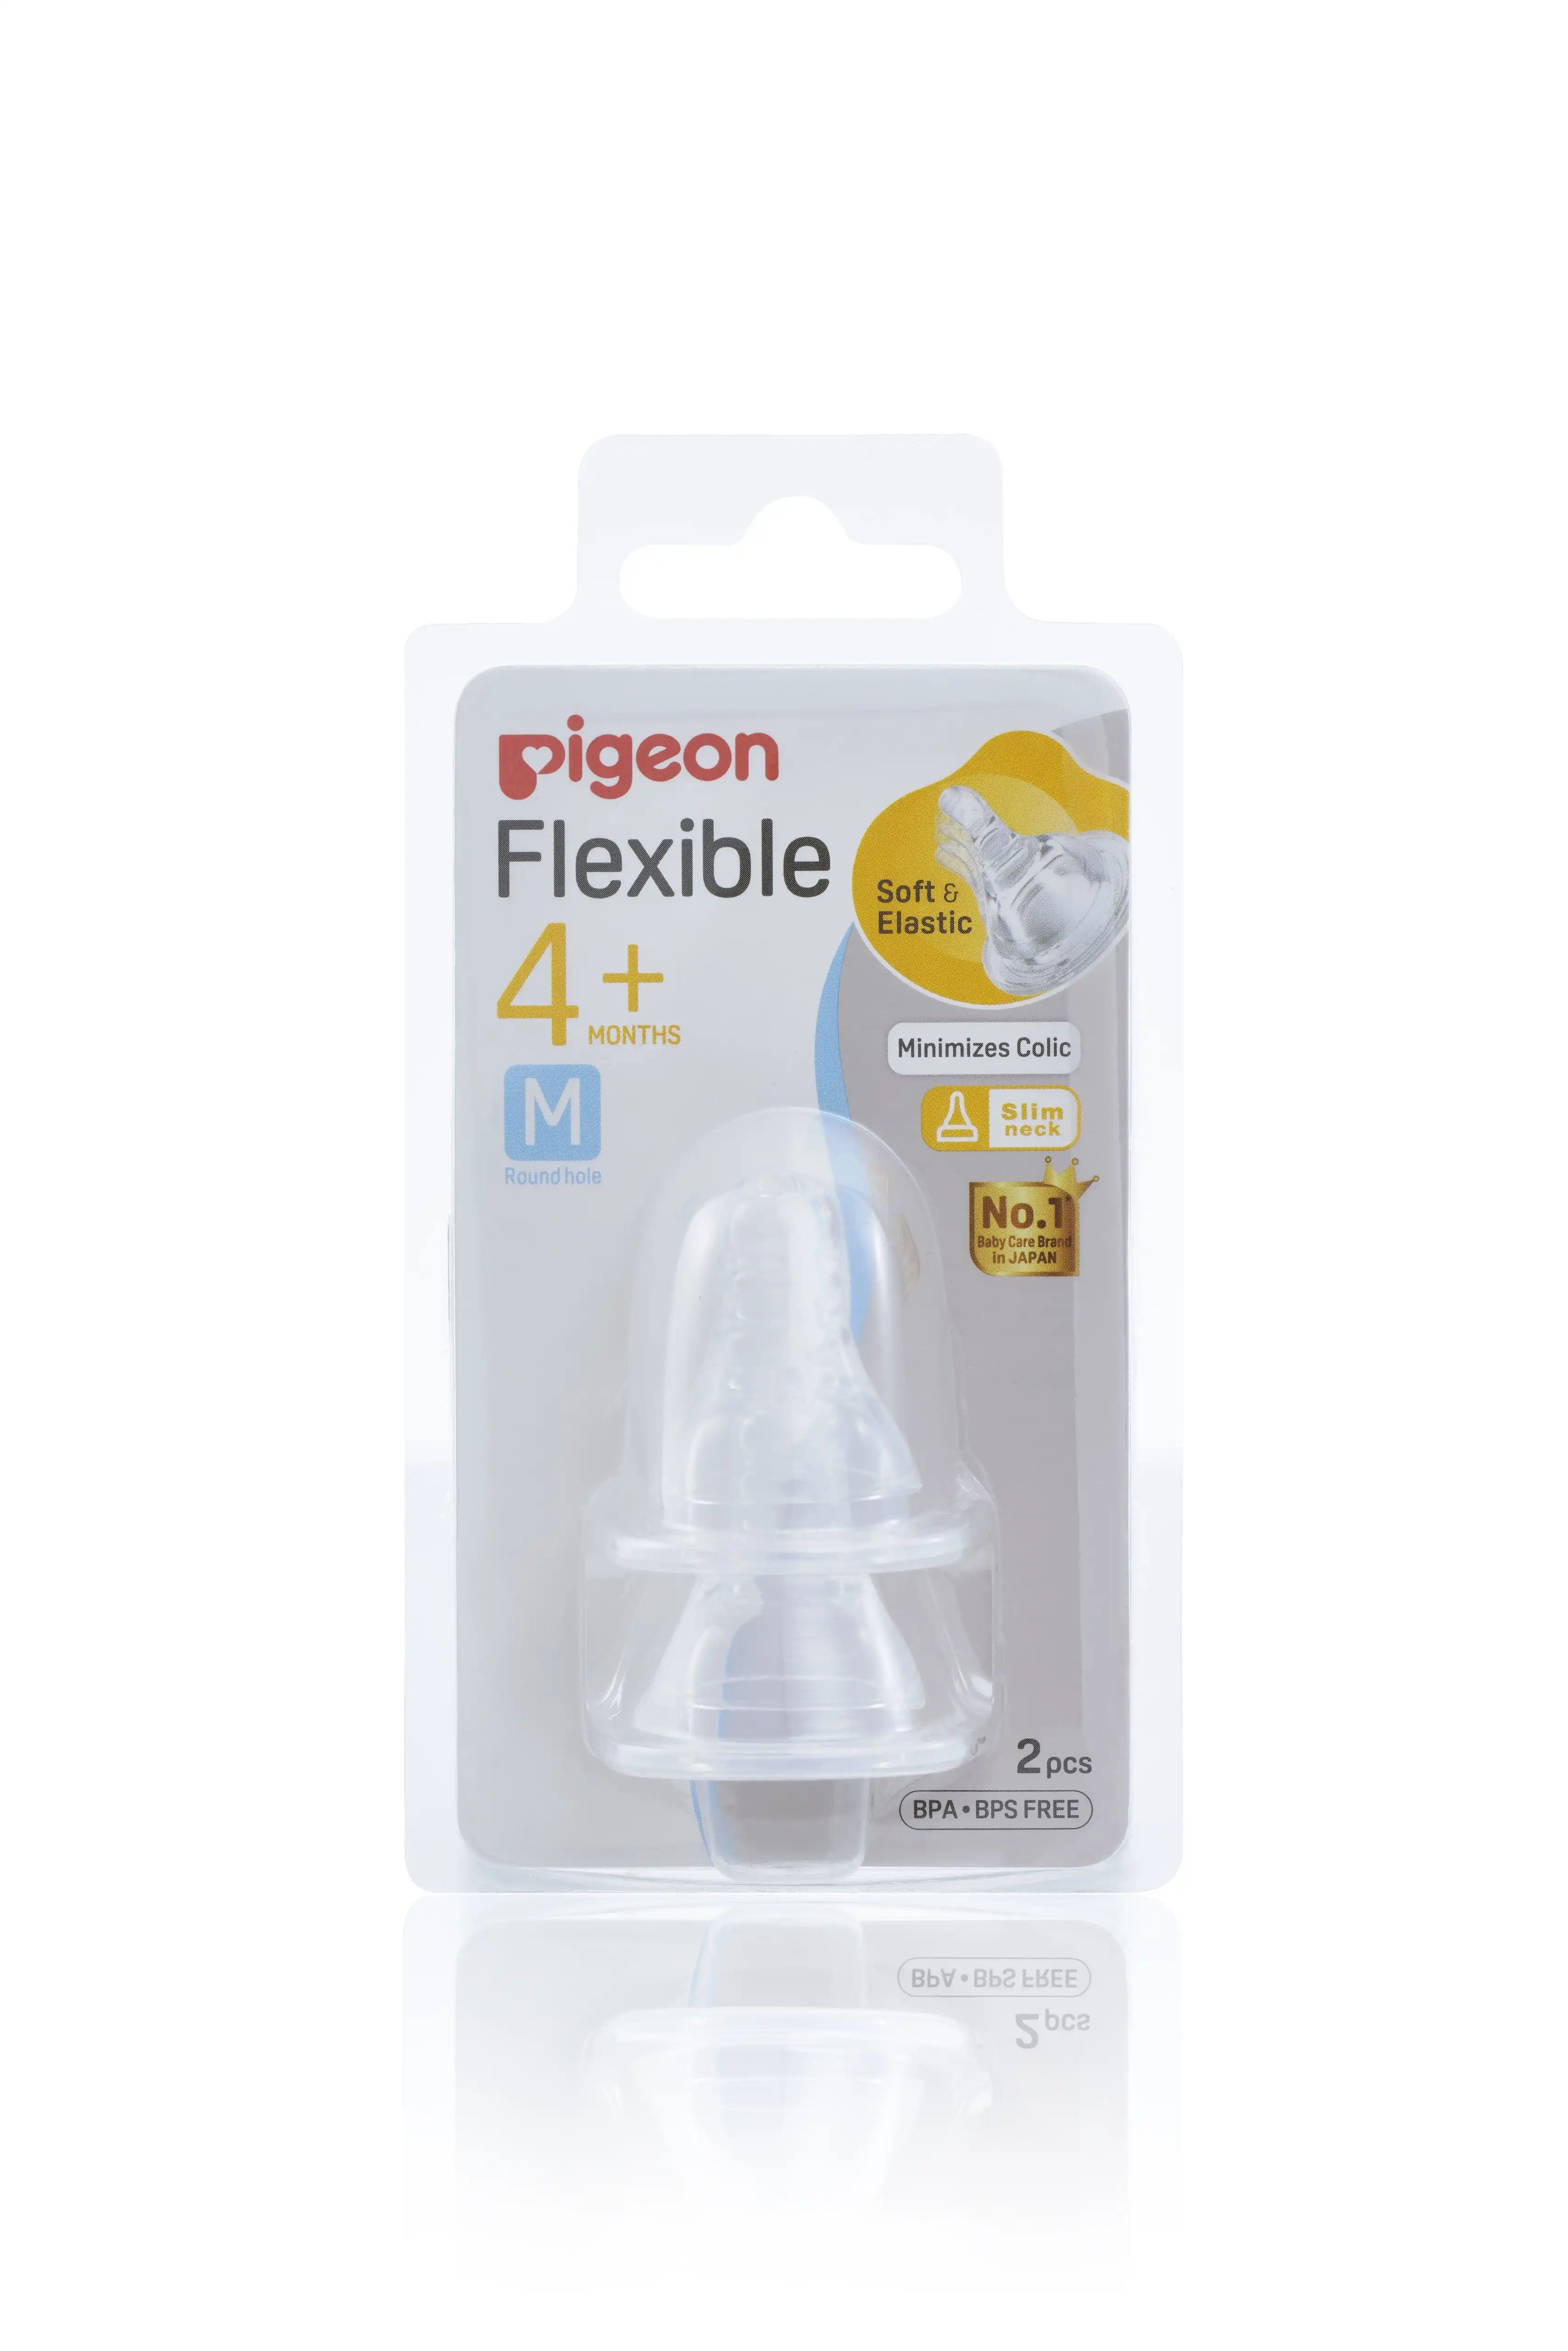 PIGEON Flexible Peristaltic Teat M 2pcs